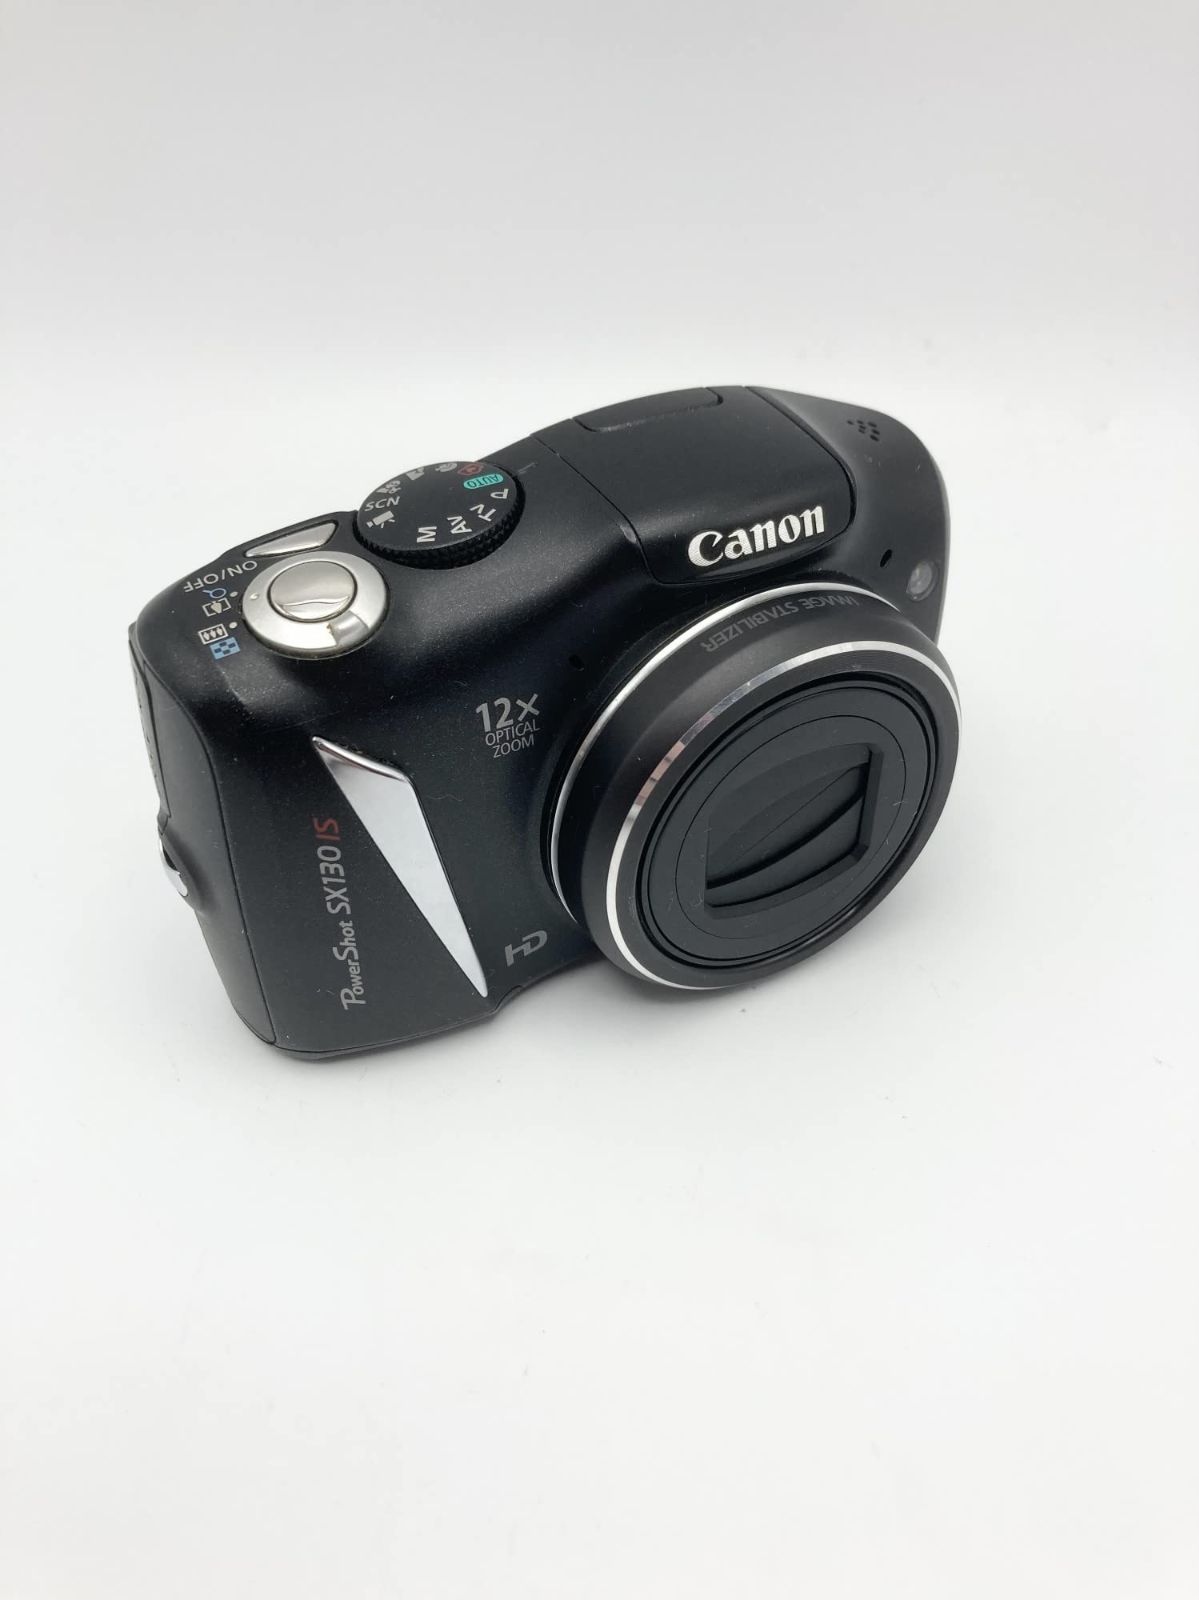 Canon キャノン デジタルカメラ Powershot SX130IS